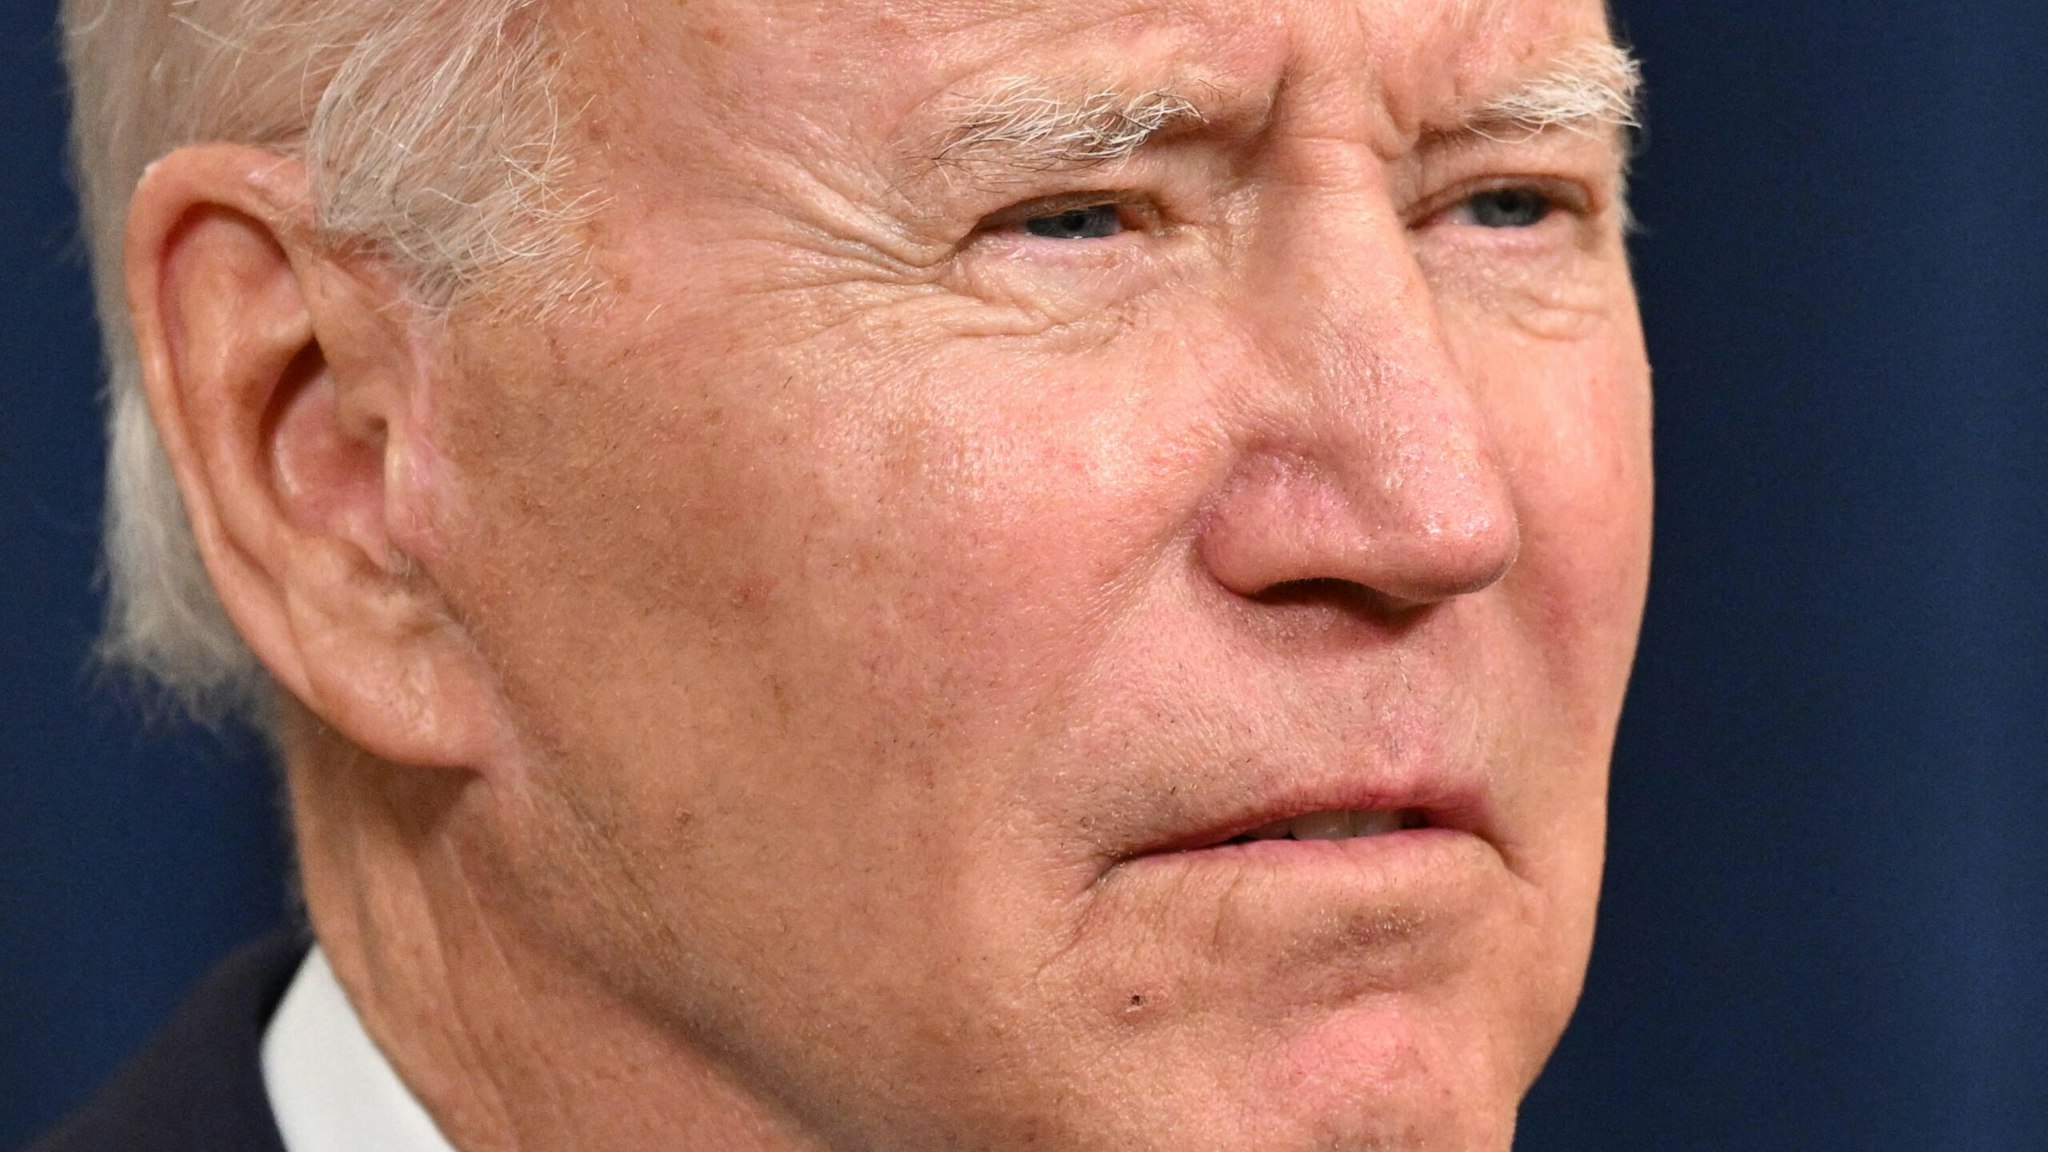 The former head of Saudi intelligence had a damning appraisal of President Joe Biden